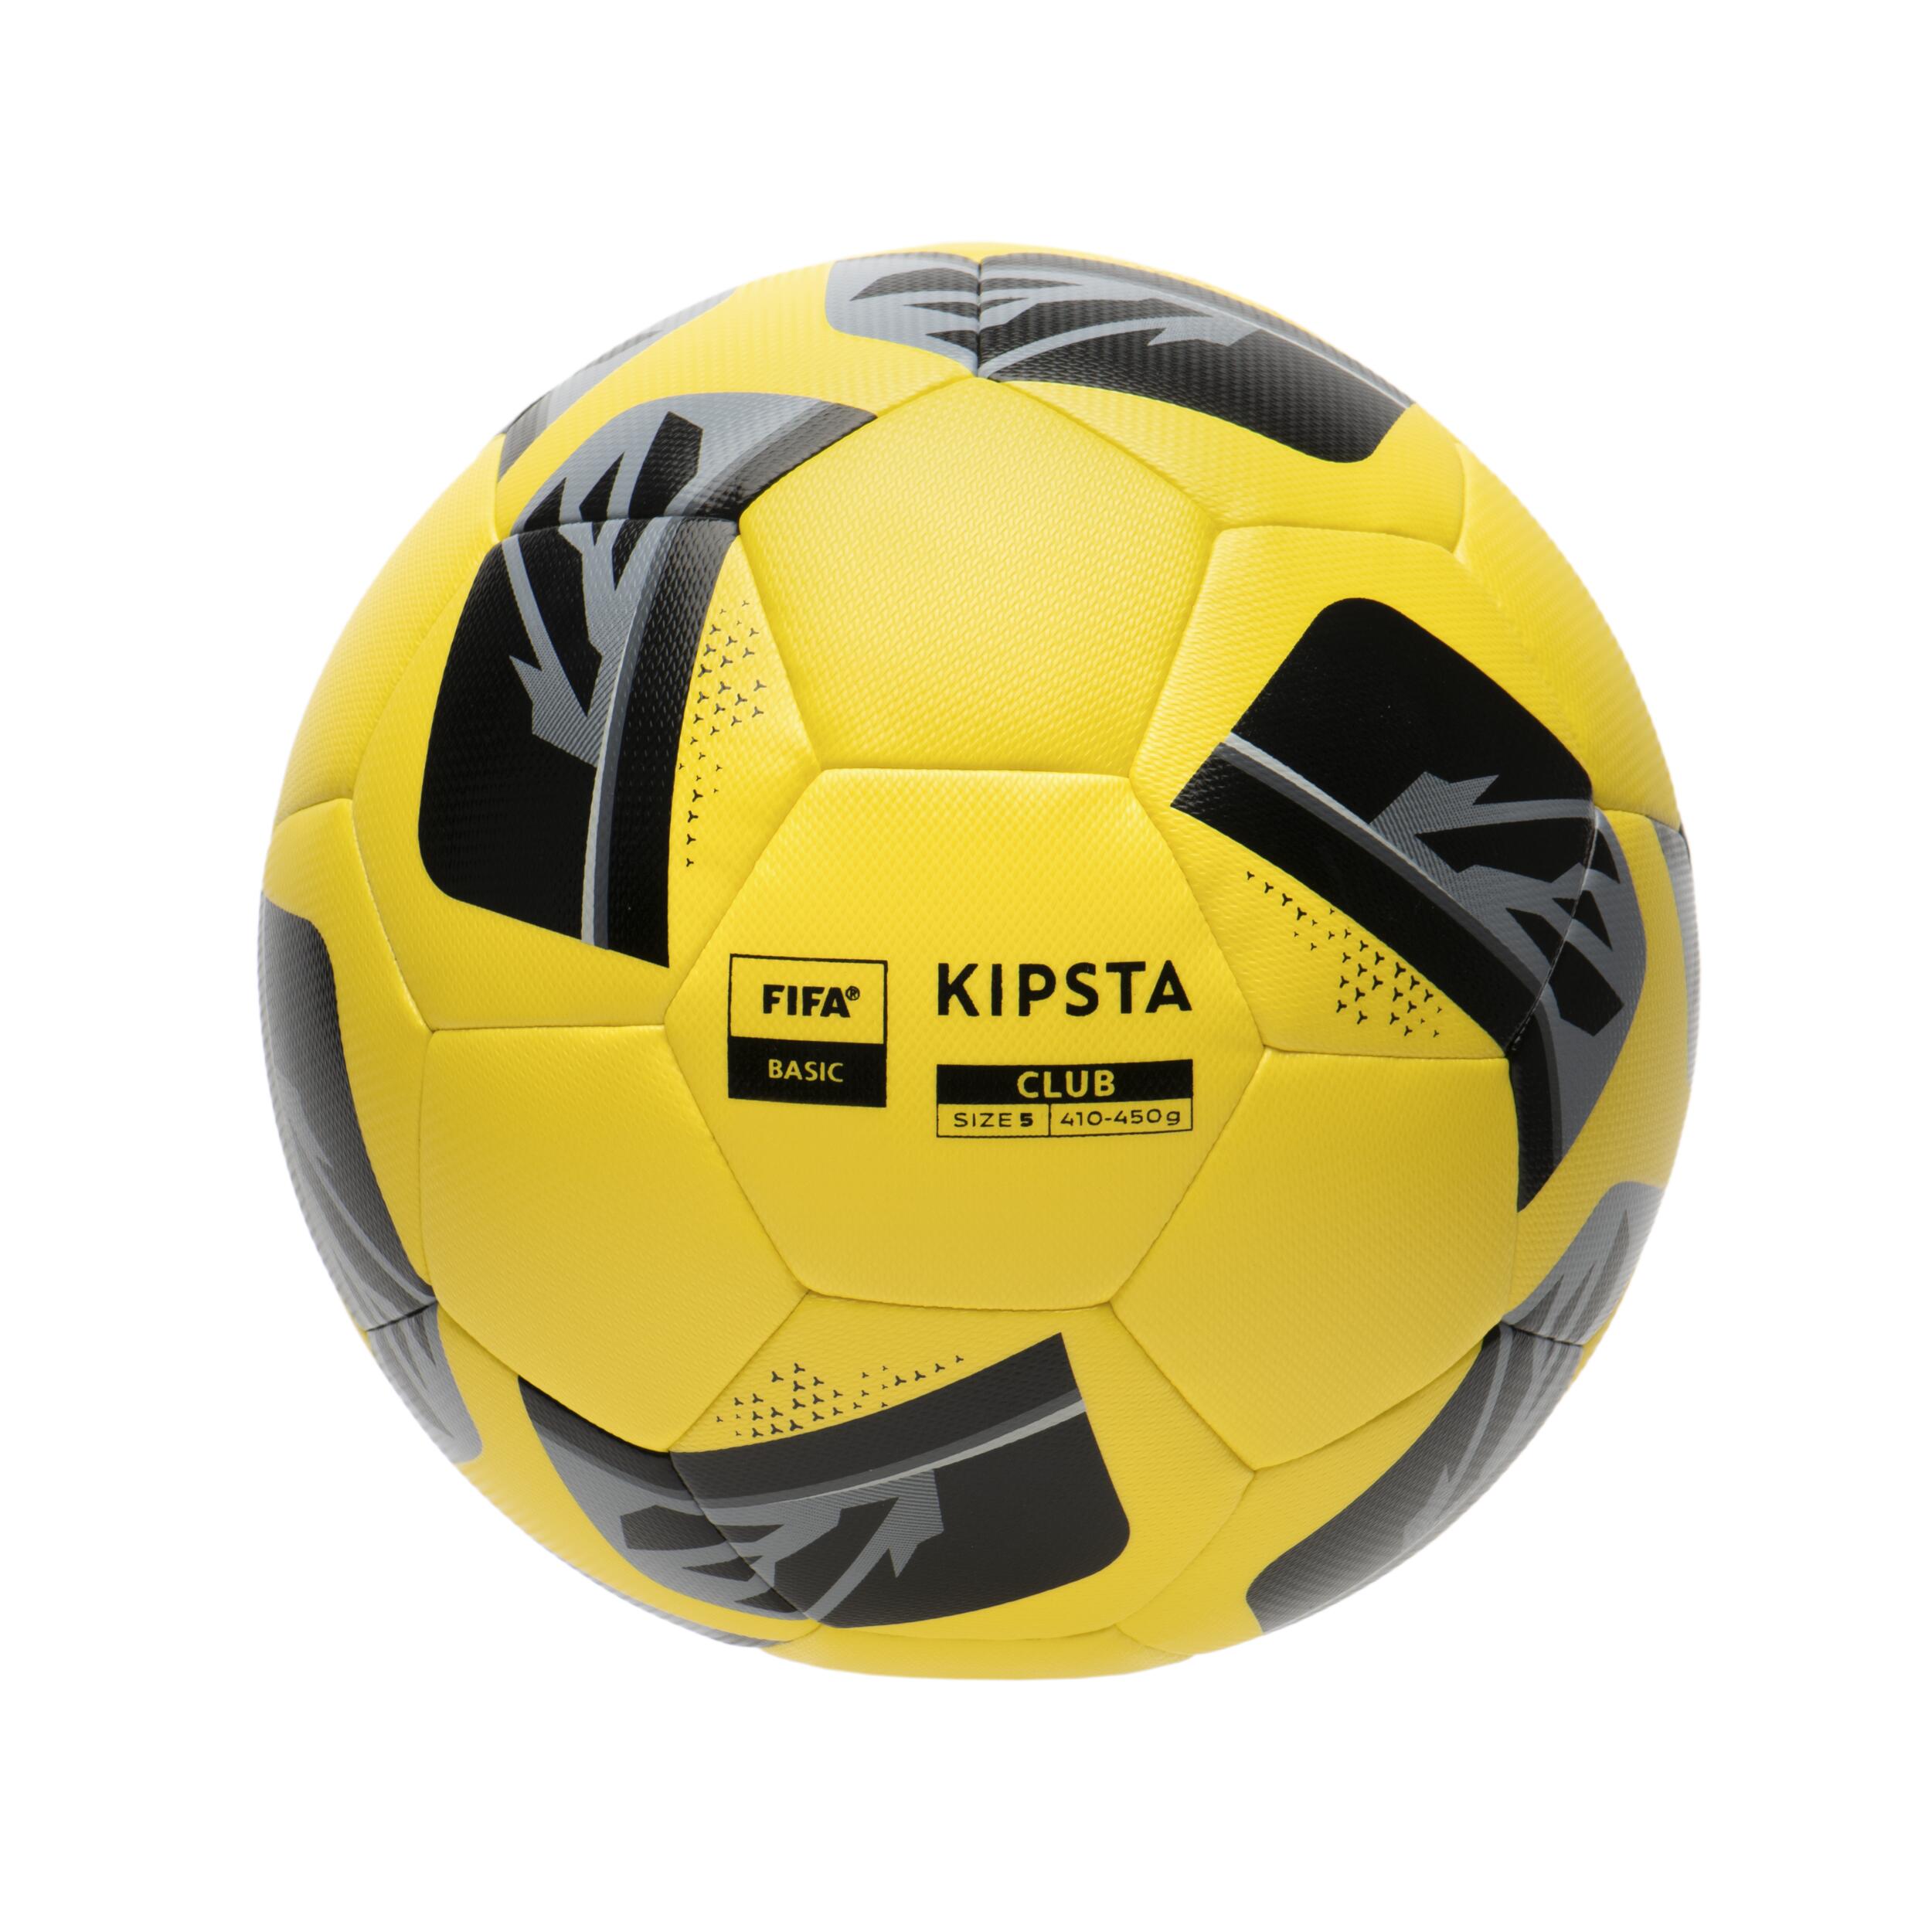 KIPSTA Size 5 FIFA Basic Football Club Hybrid - Yellow